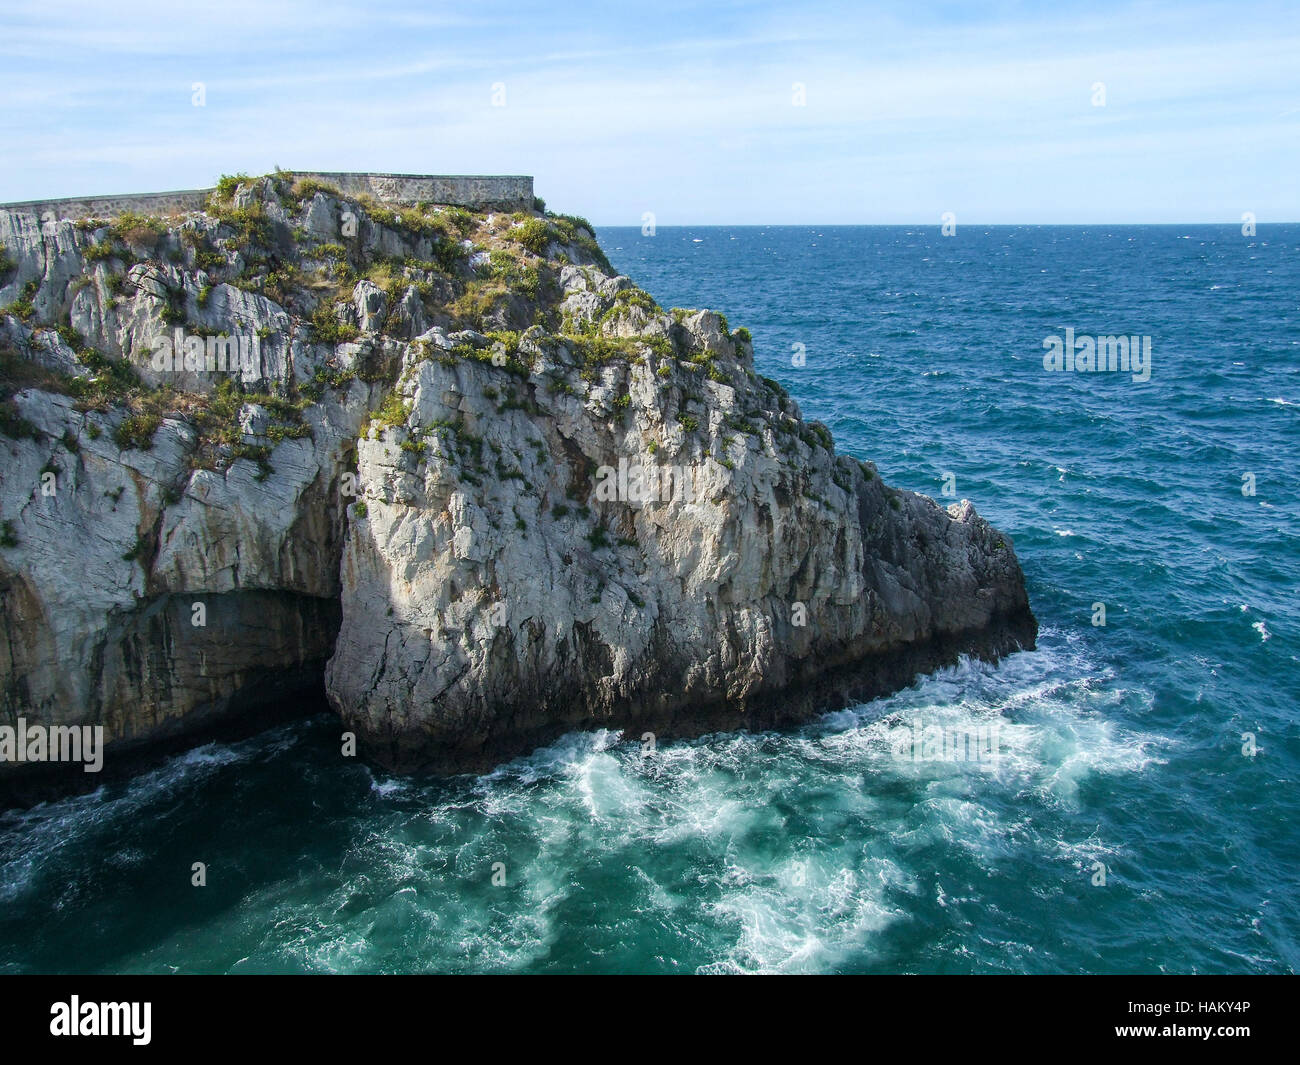 The Cantabrian Sea crashes into the rocks of the coast Stock Photo